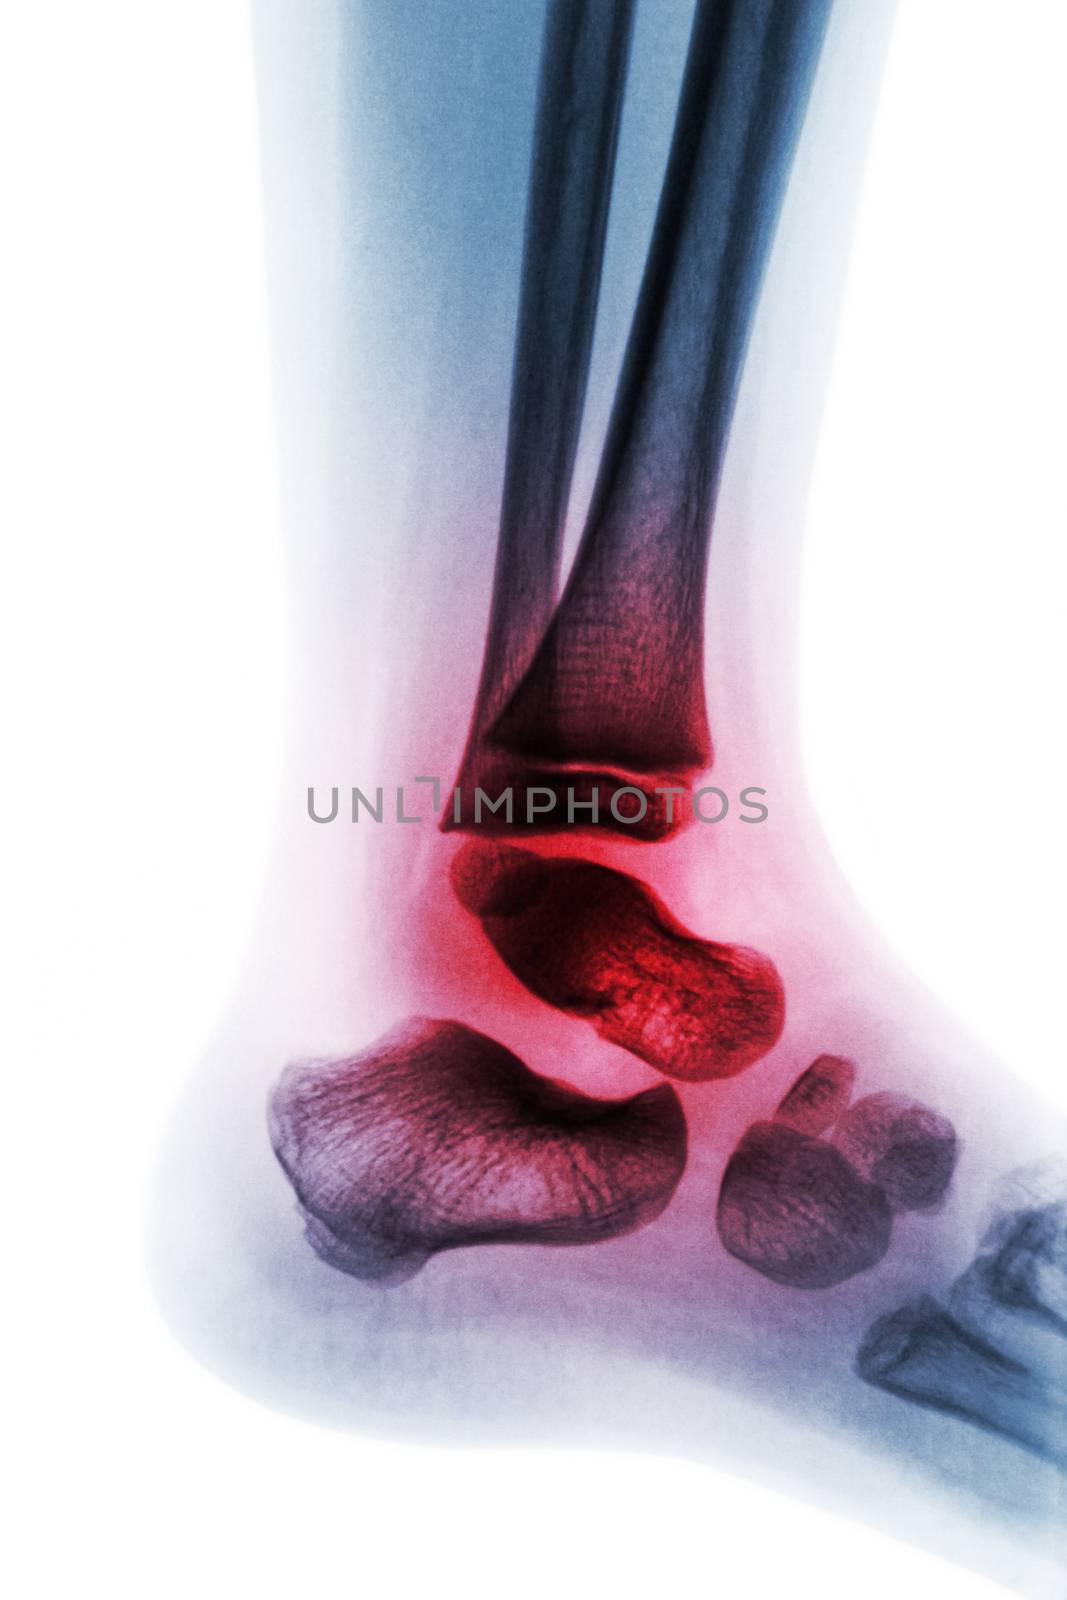 Arthritis of ankle ( Juvenile rheumatoid ) . by stockdevil